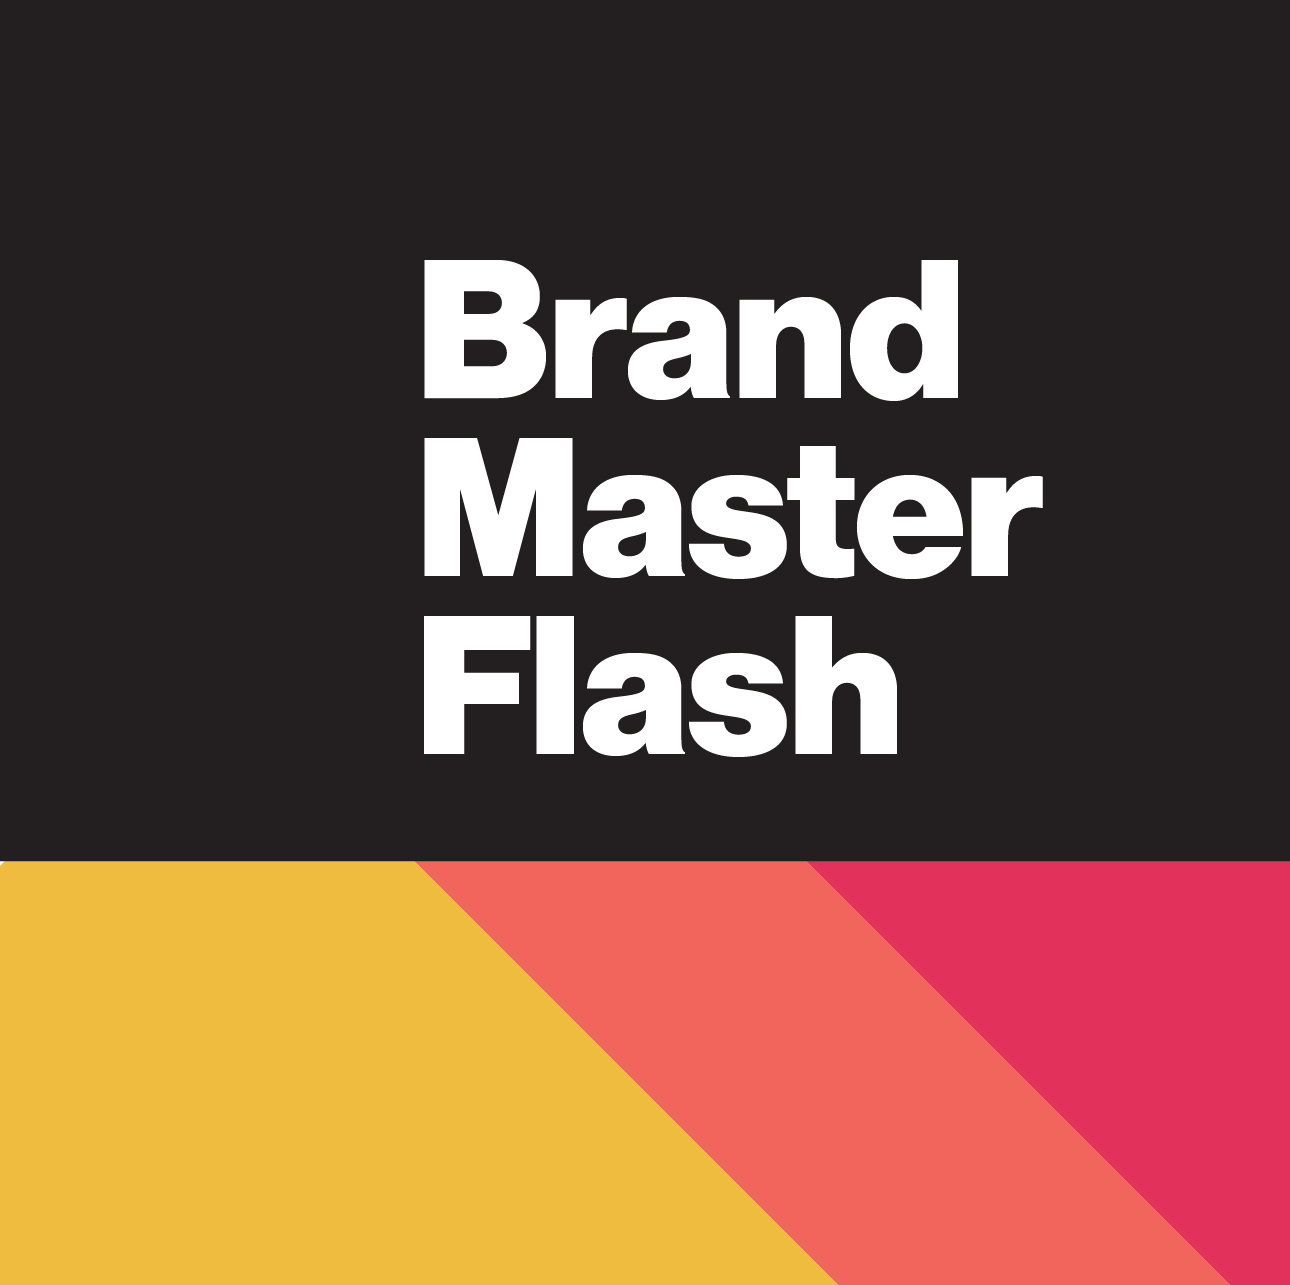 Brand Master Flash